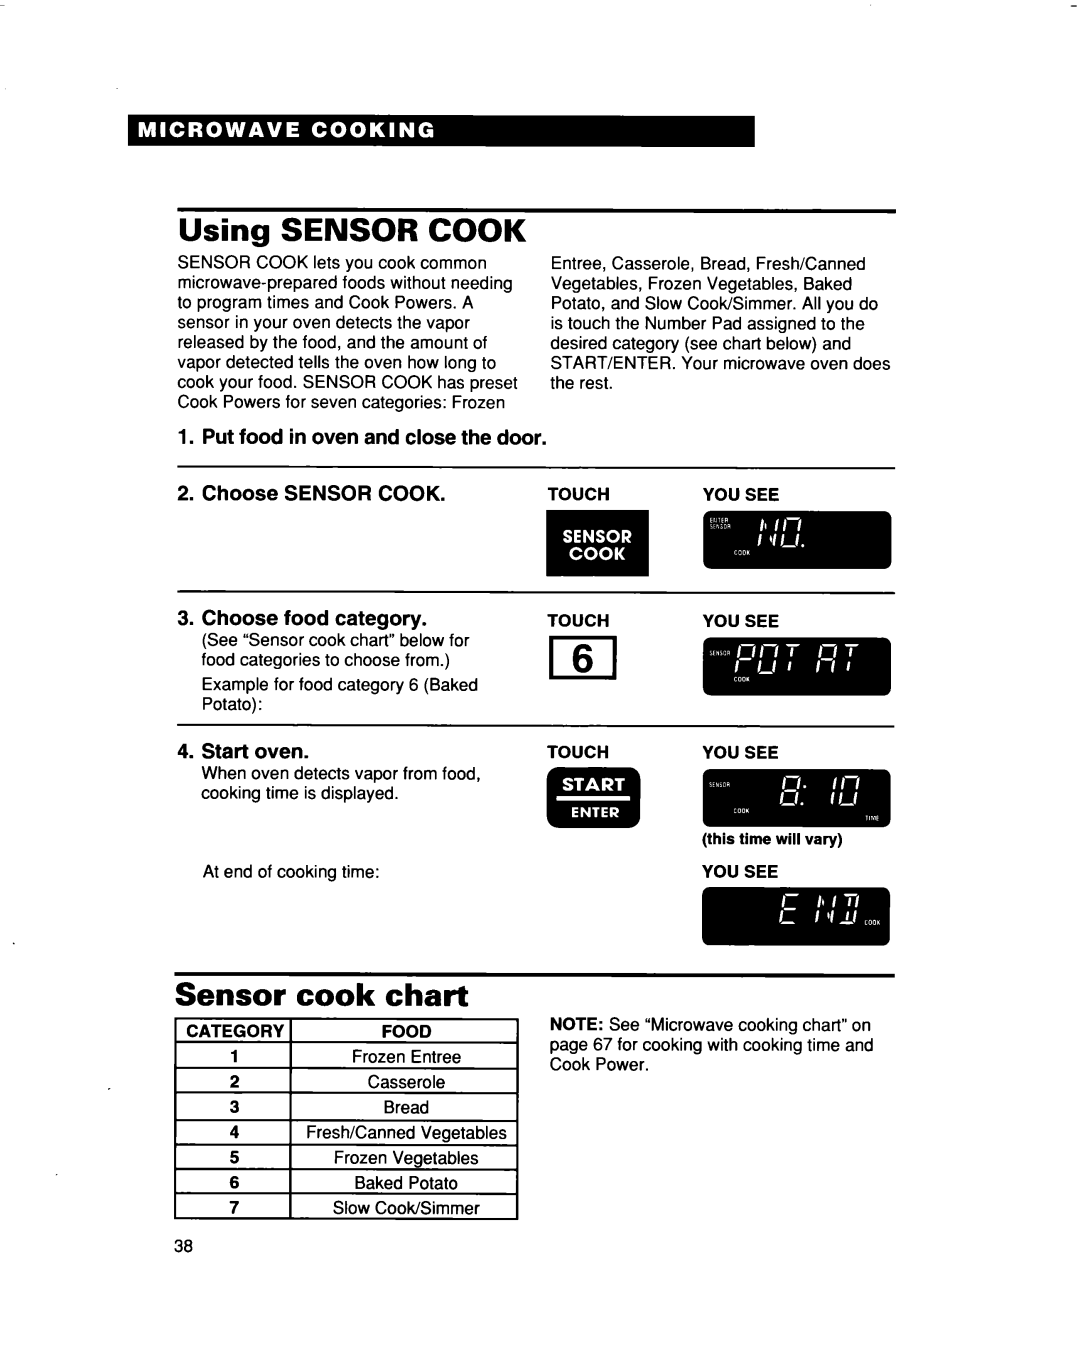 Whirlpool MH9115XB warranty Using SENSOR COOK, Sensor cook chart, Choose SENSOR COOK 3.Choose food category, Star& oven 